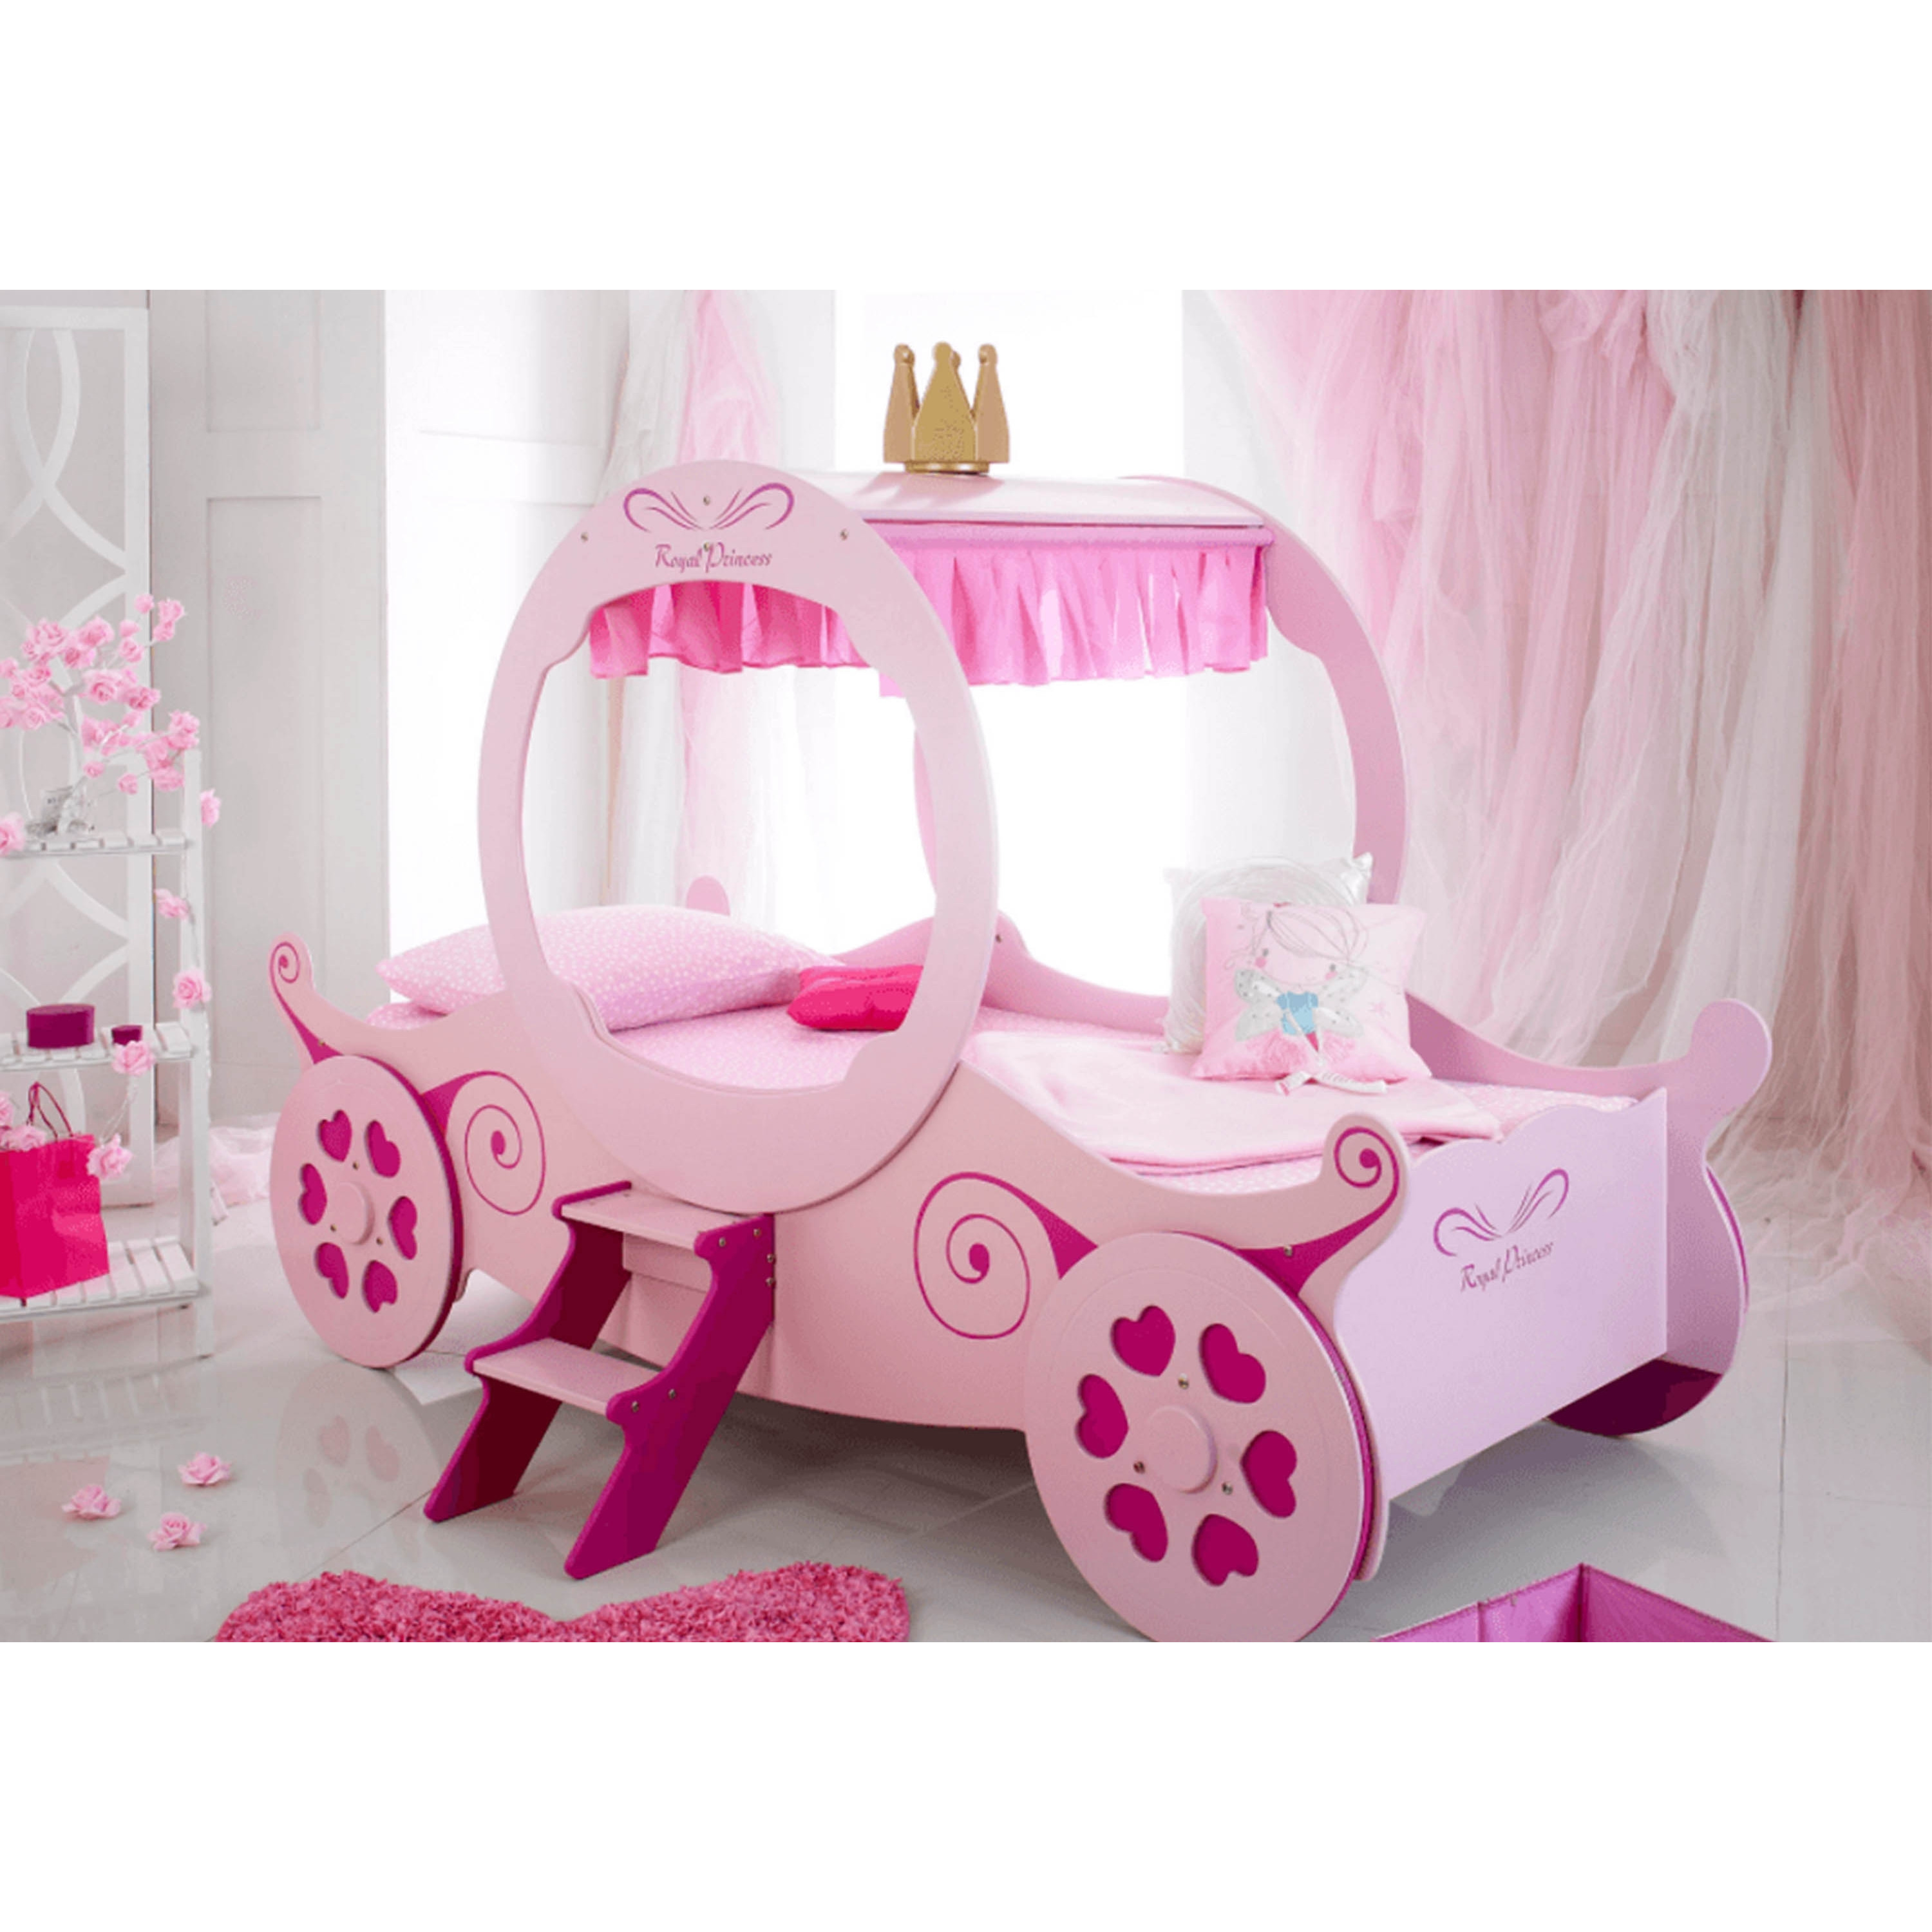 Artisan Princess Carriage Bed Frame - image 1